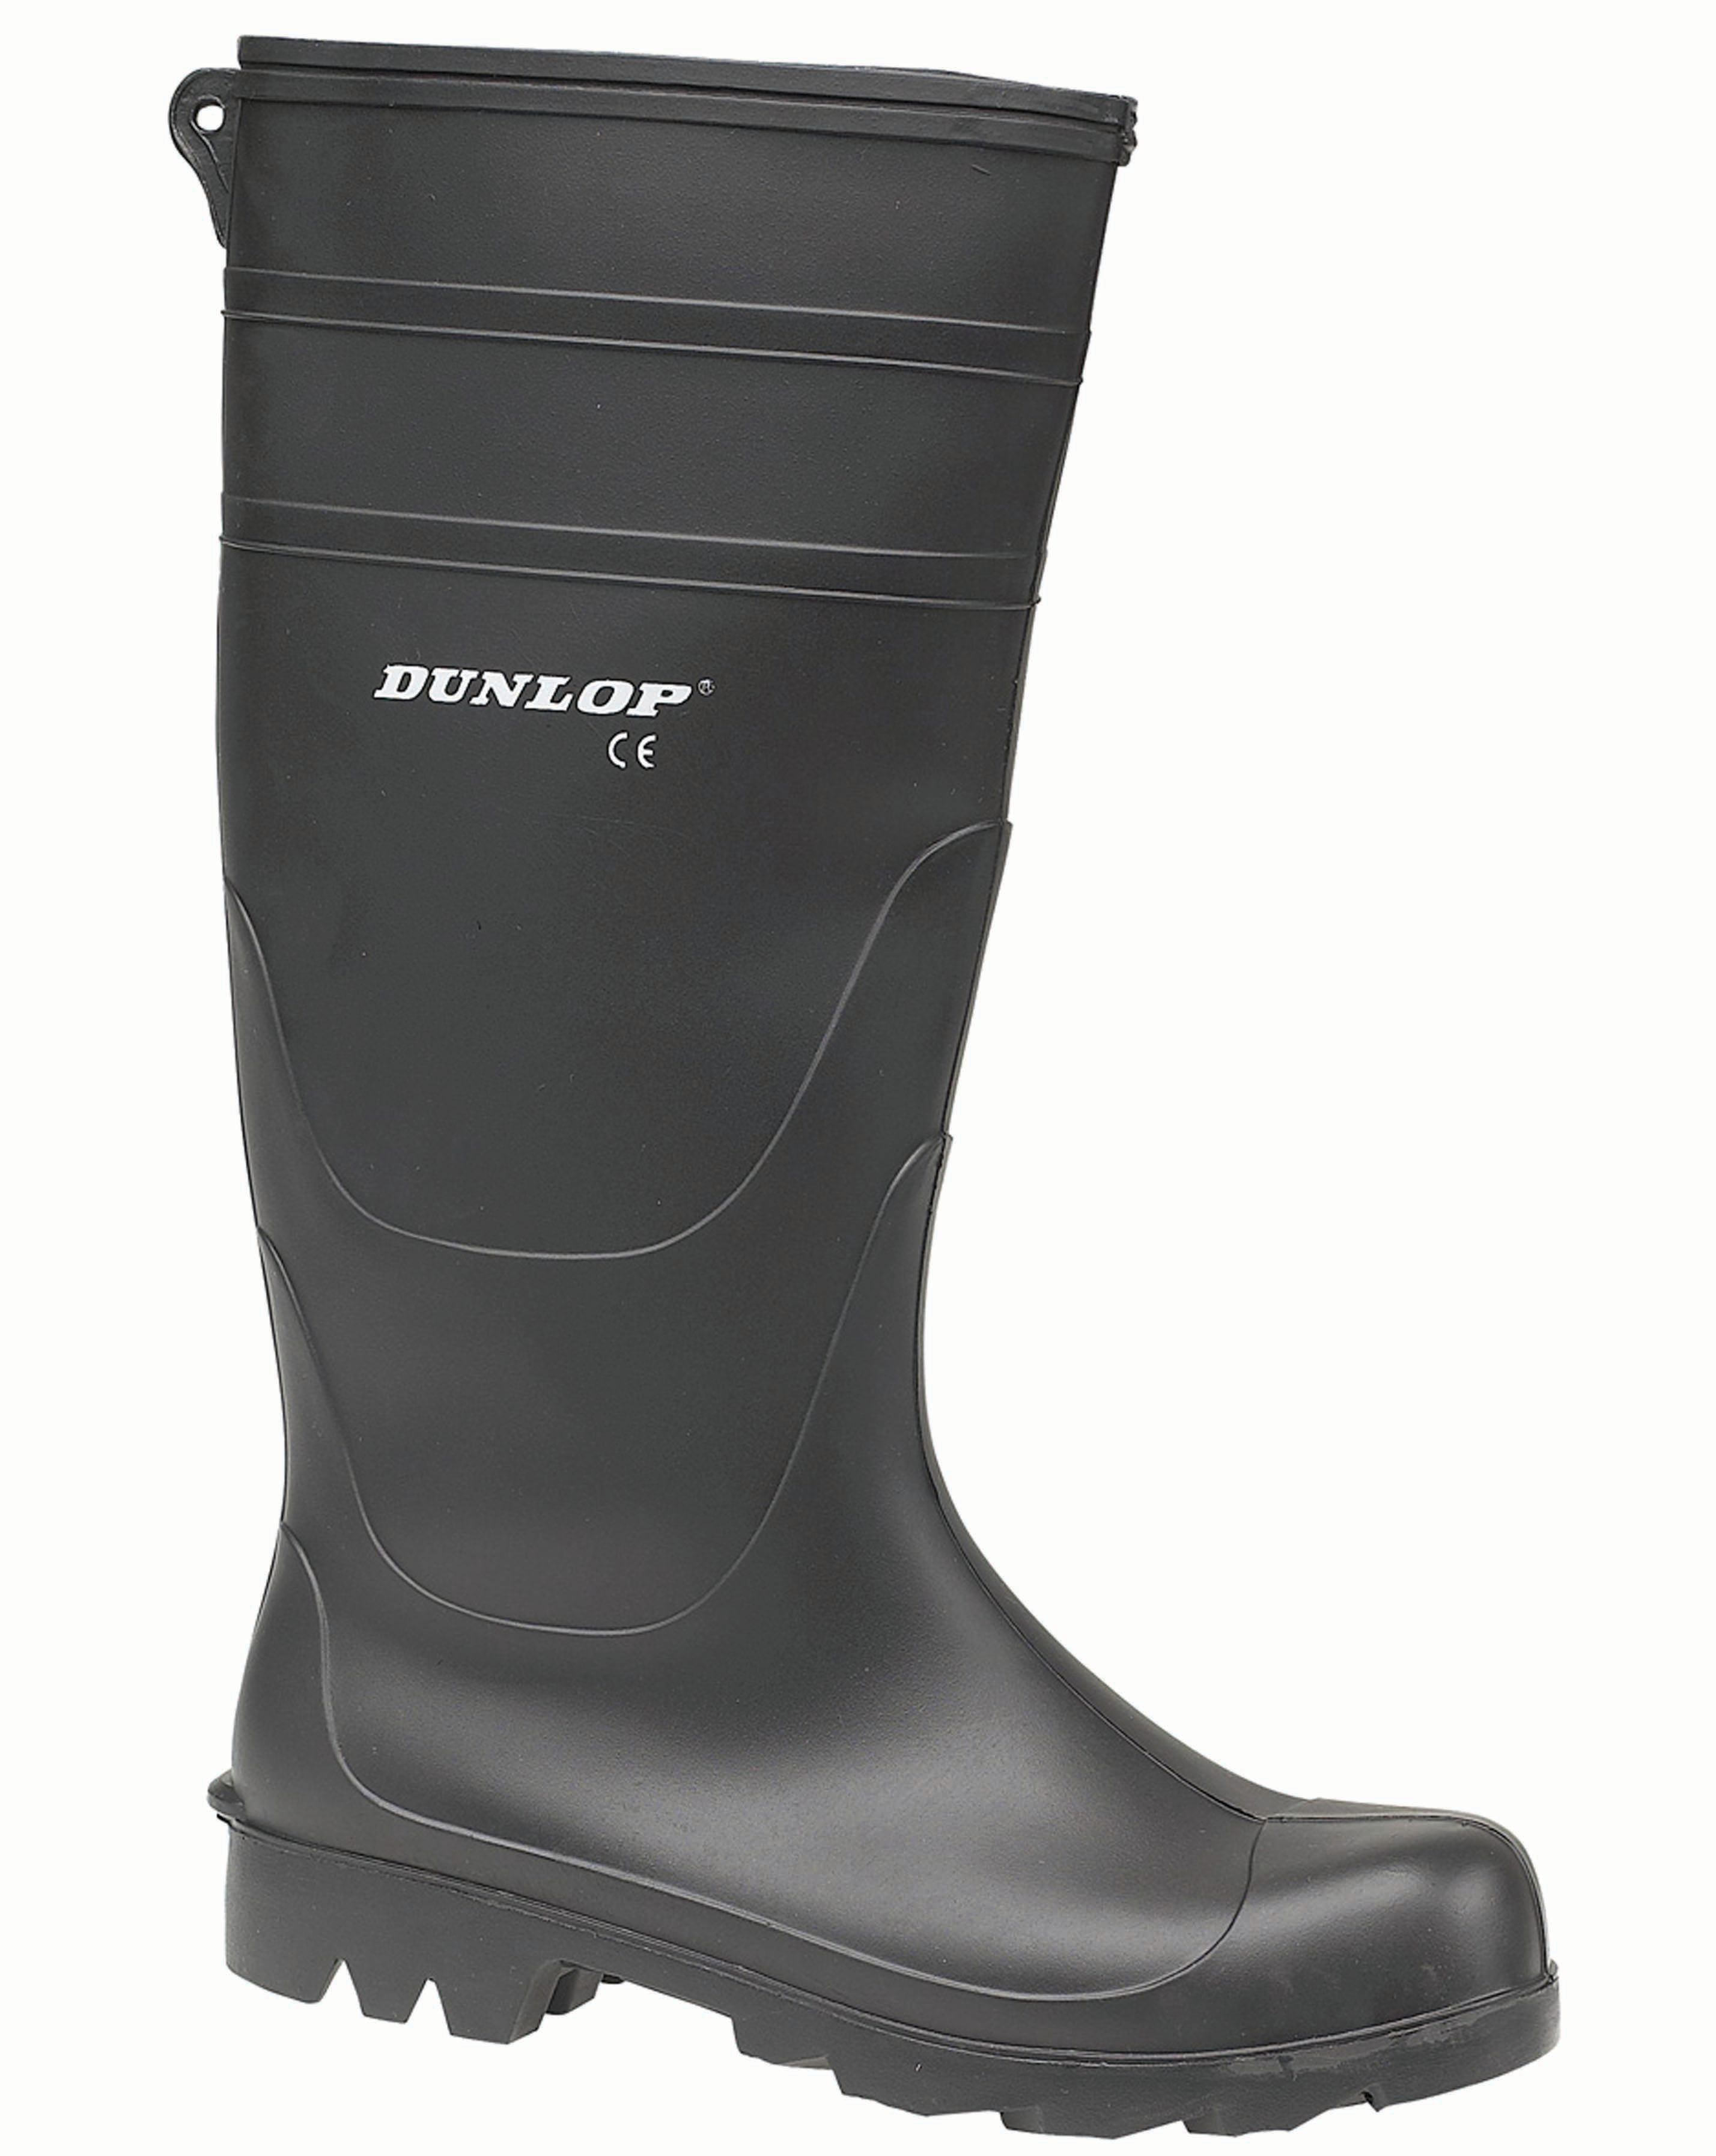 Image of Dunlop Universal PVC Wellington Boot - Black Size 7